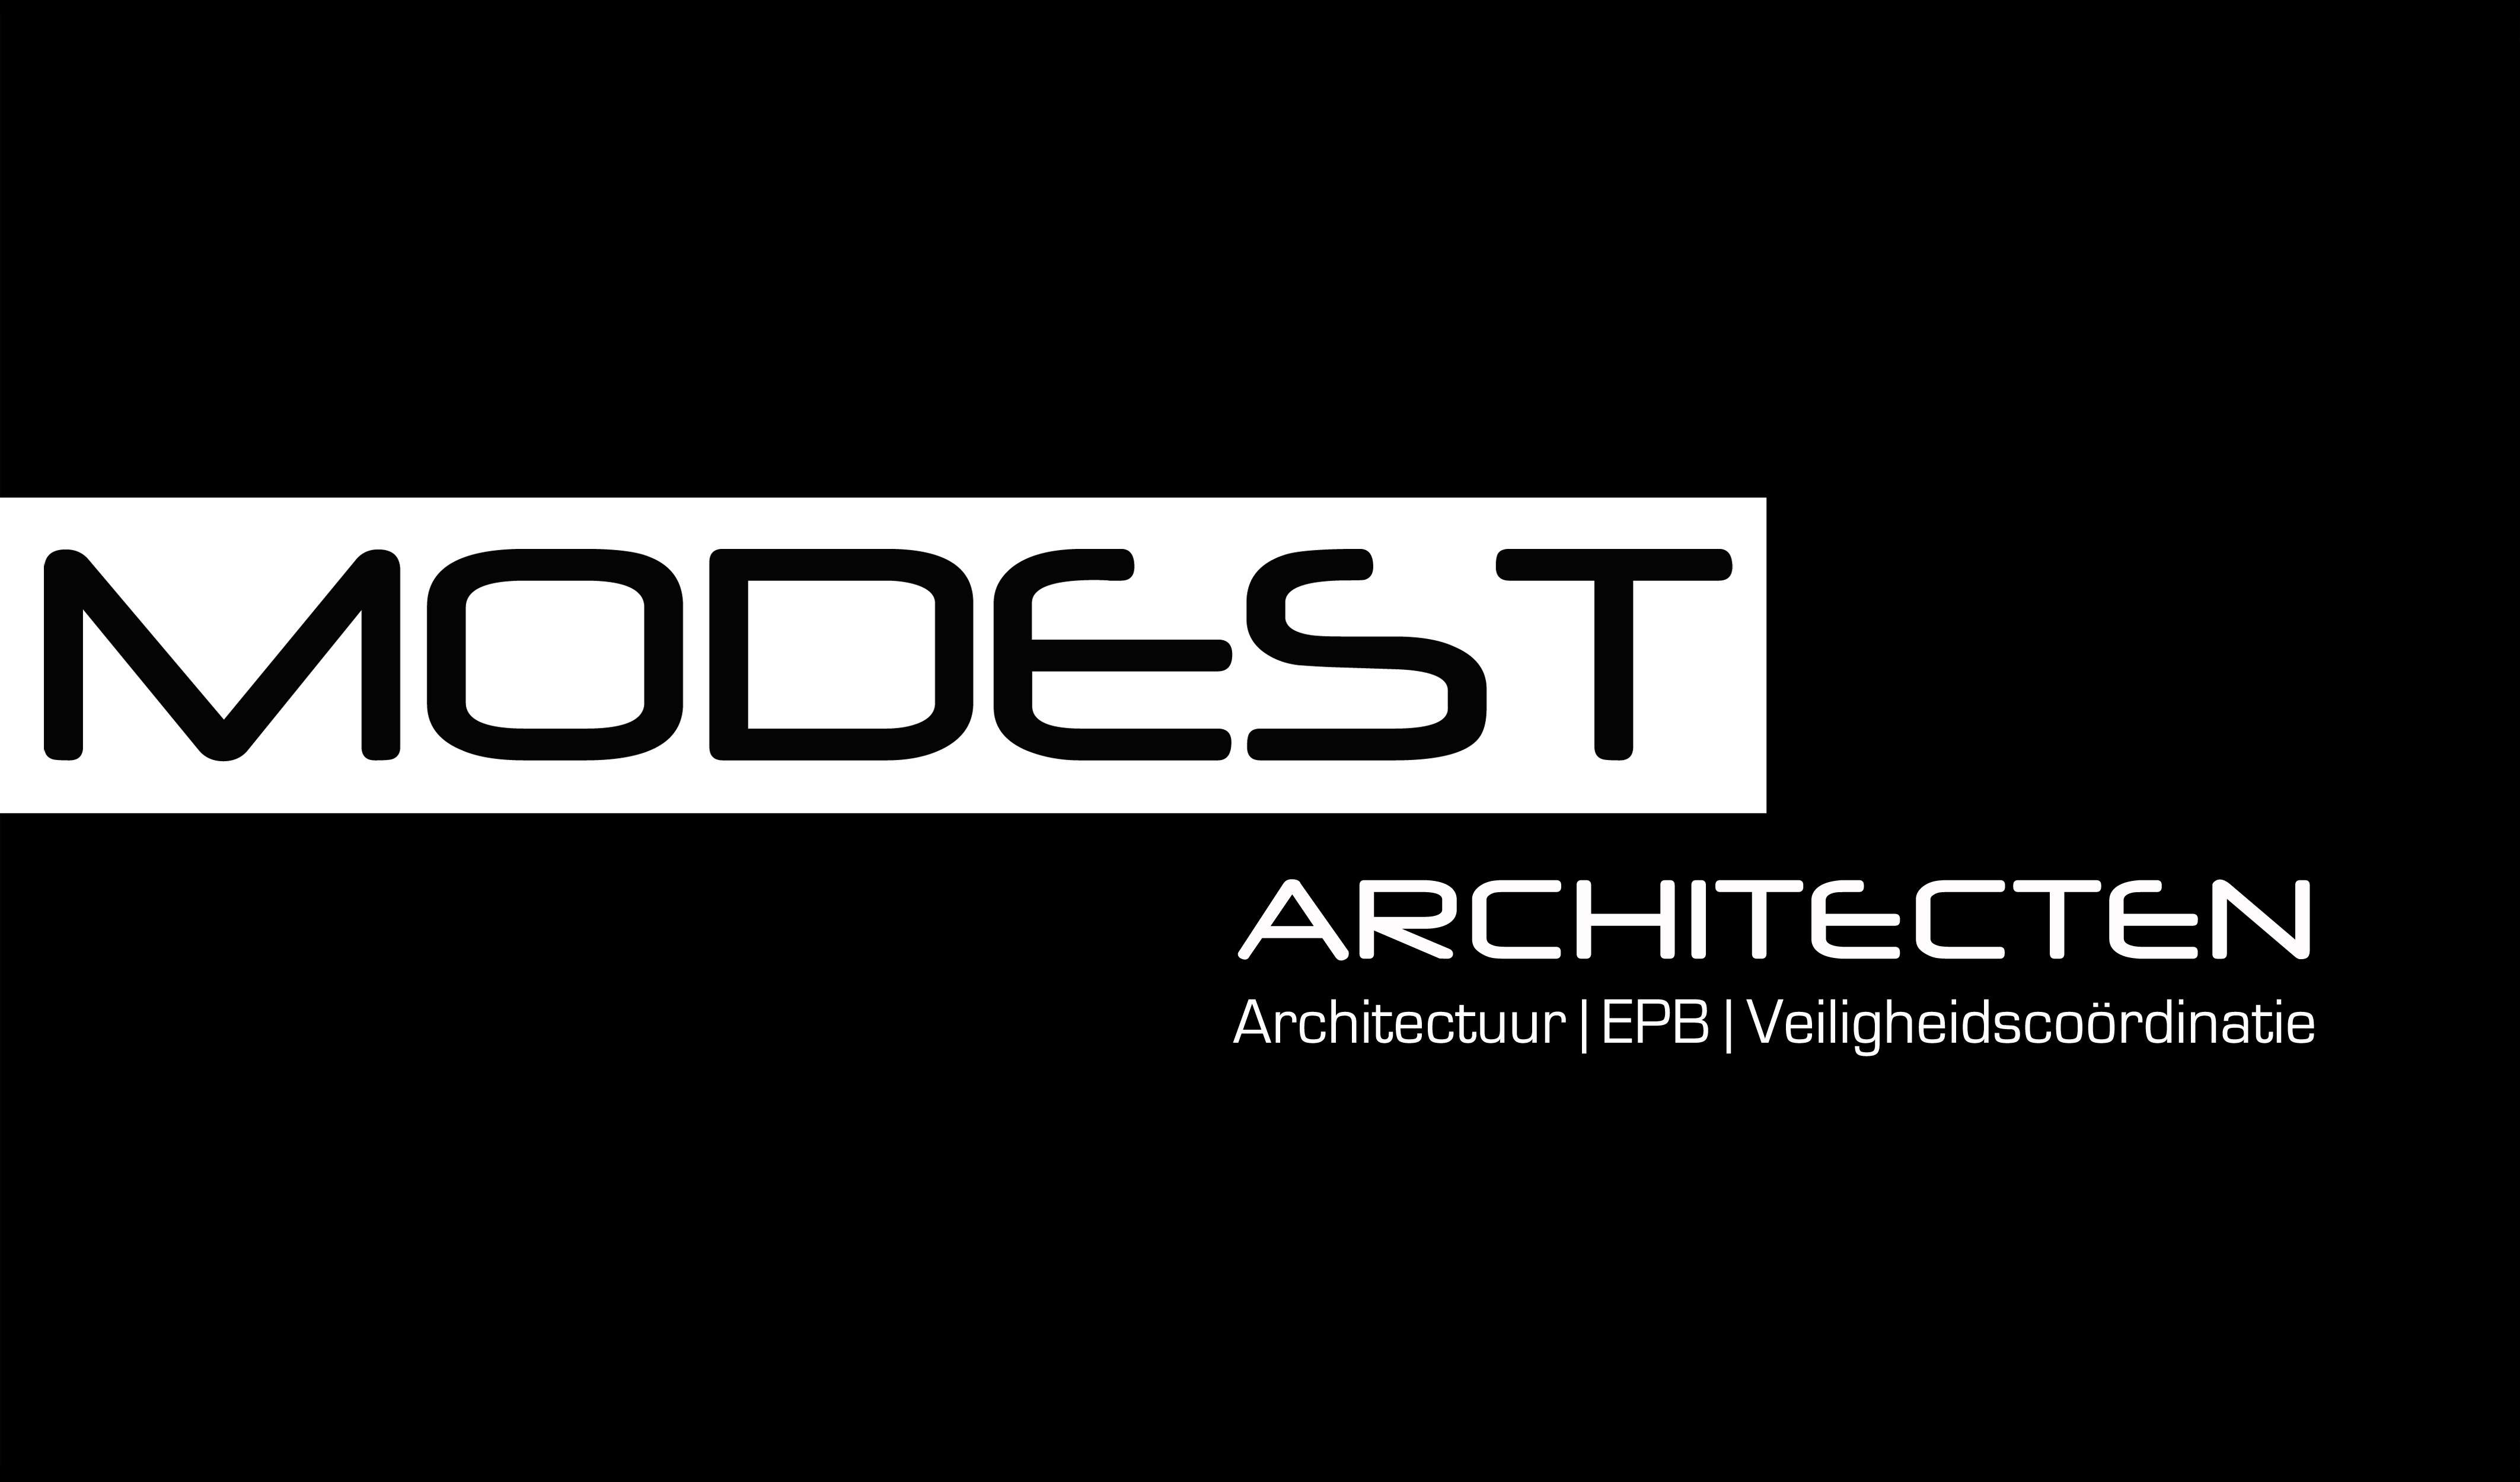 architecten Gent | MODEST Architecten